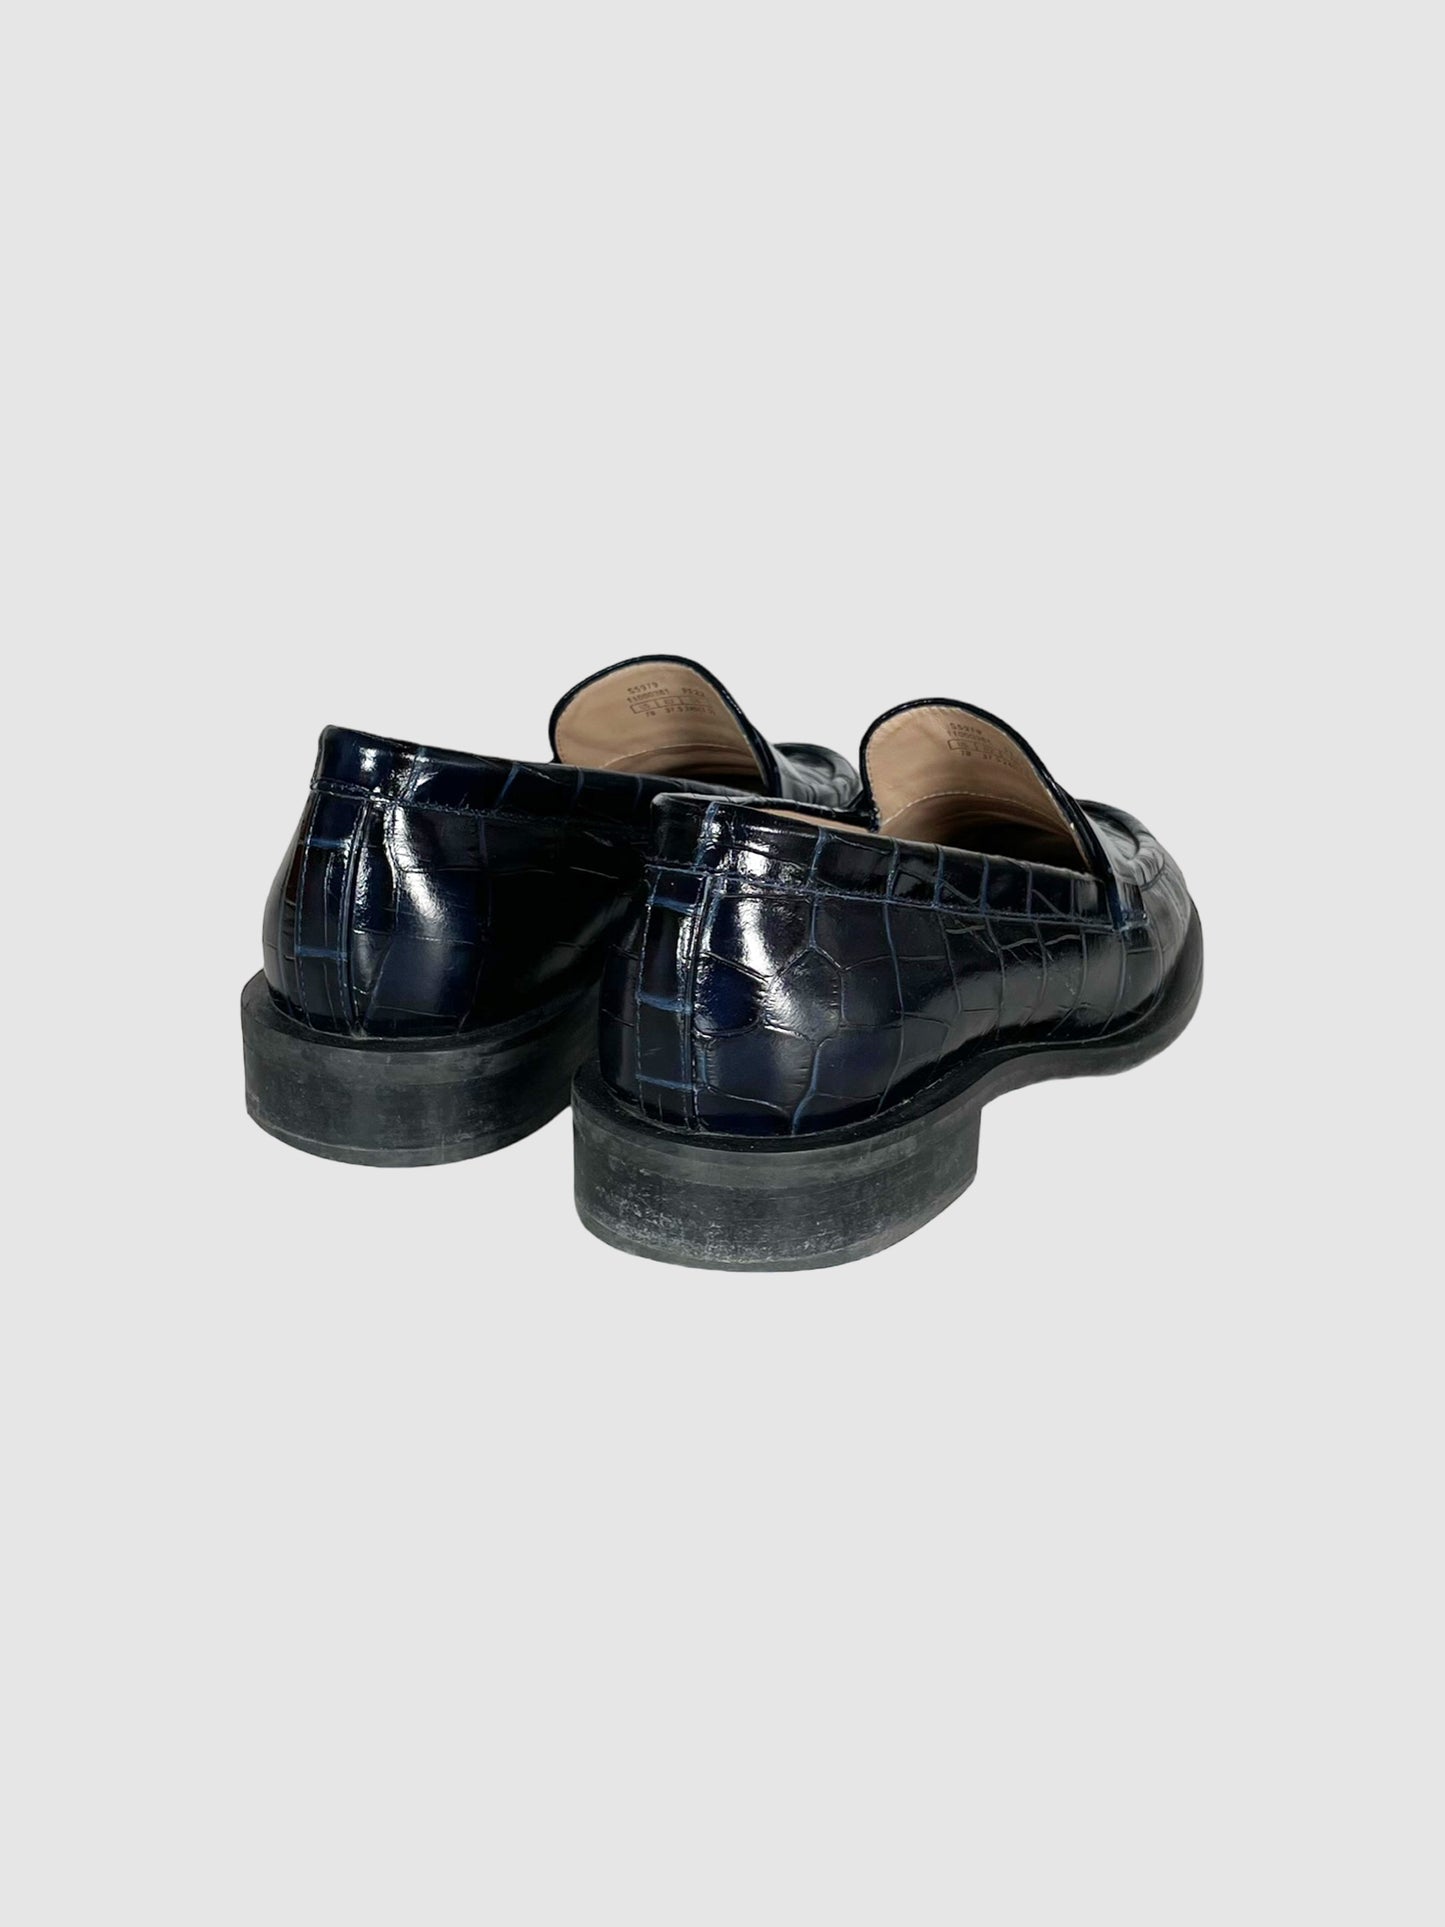 Stuart Weitzman Croc Embossed Leather Loafers - Size 7.5